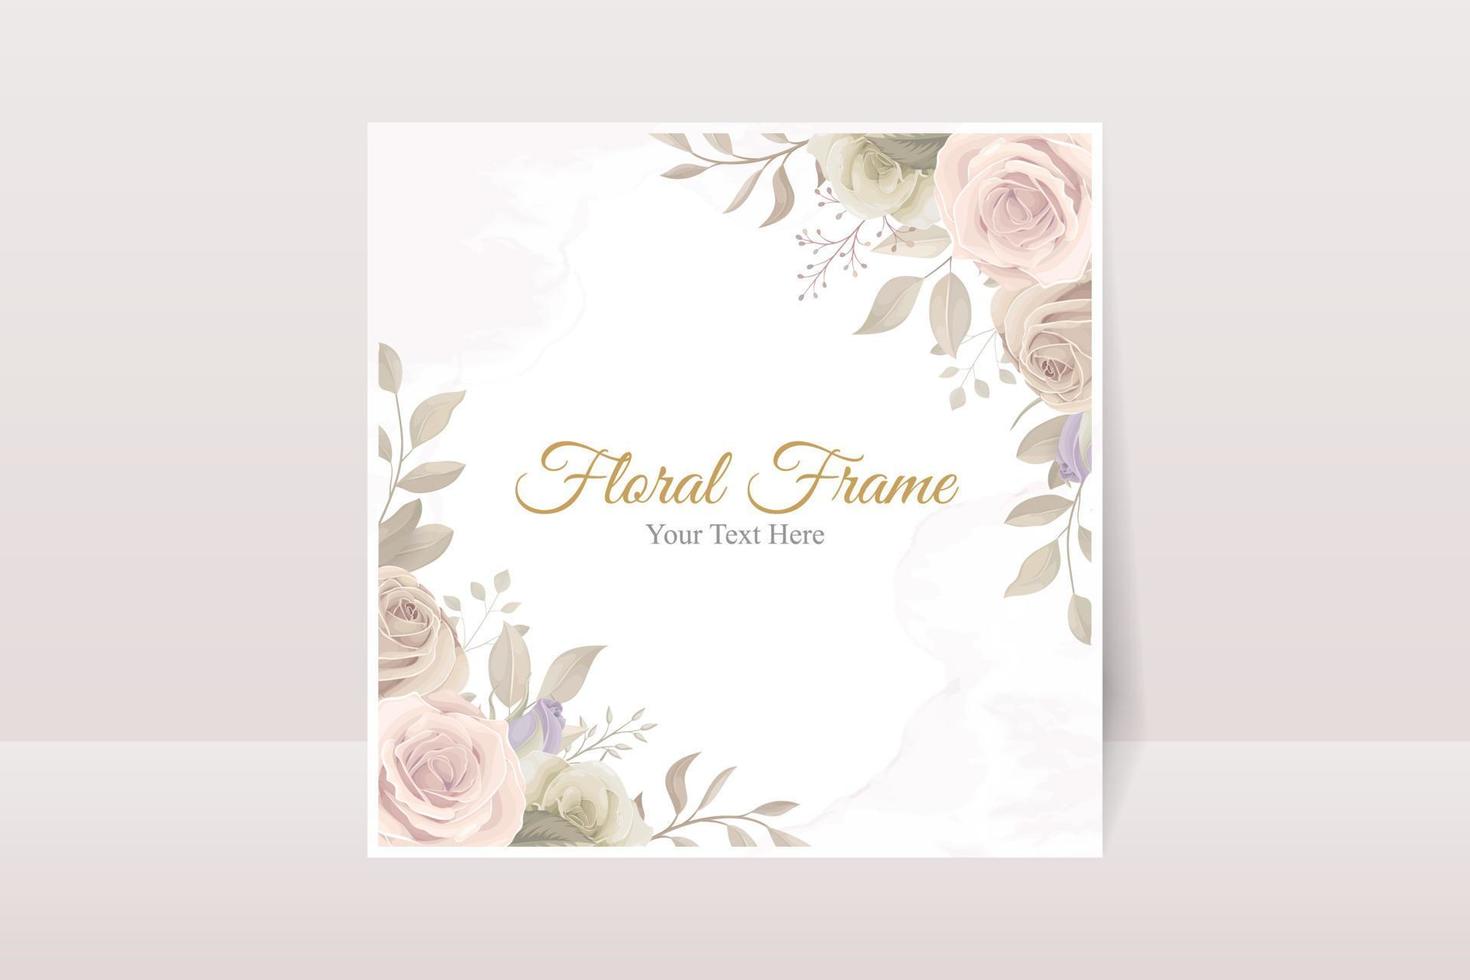 Beautiful floral frame background design vector